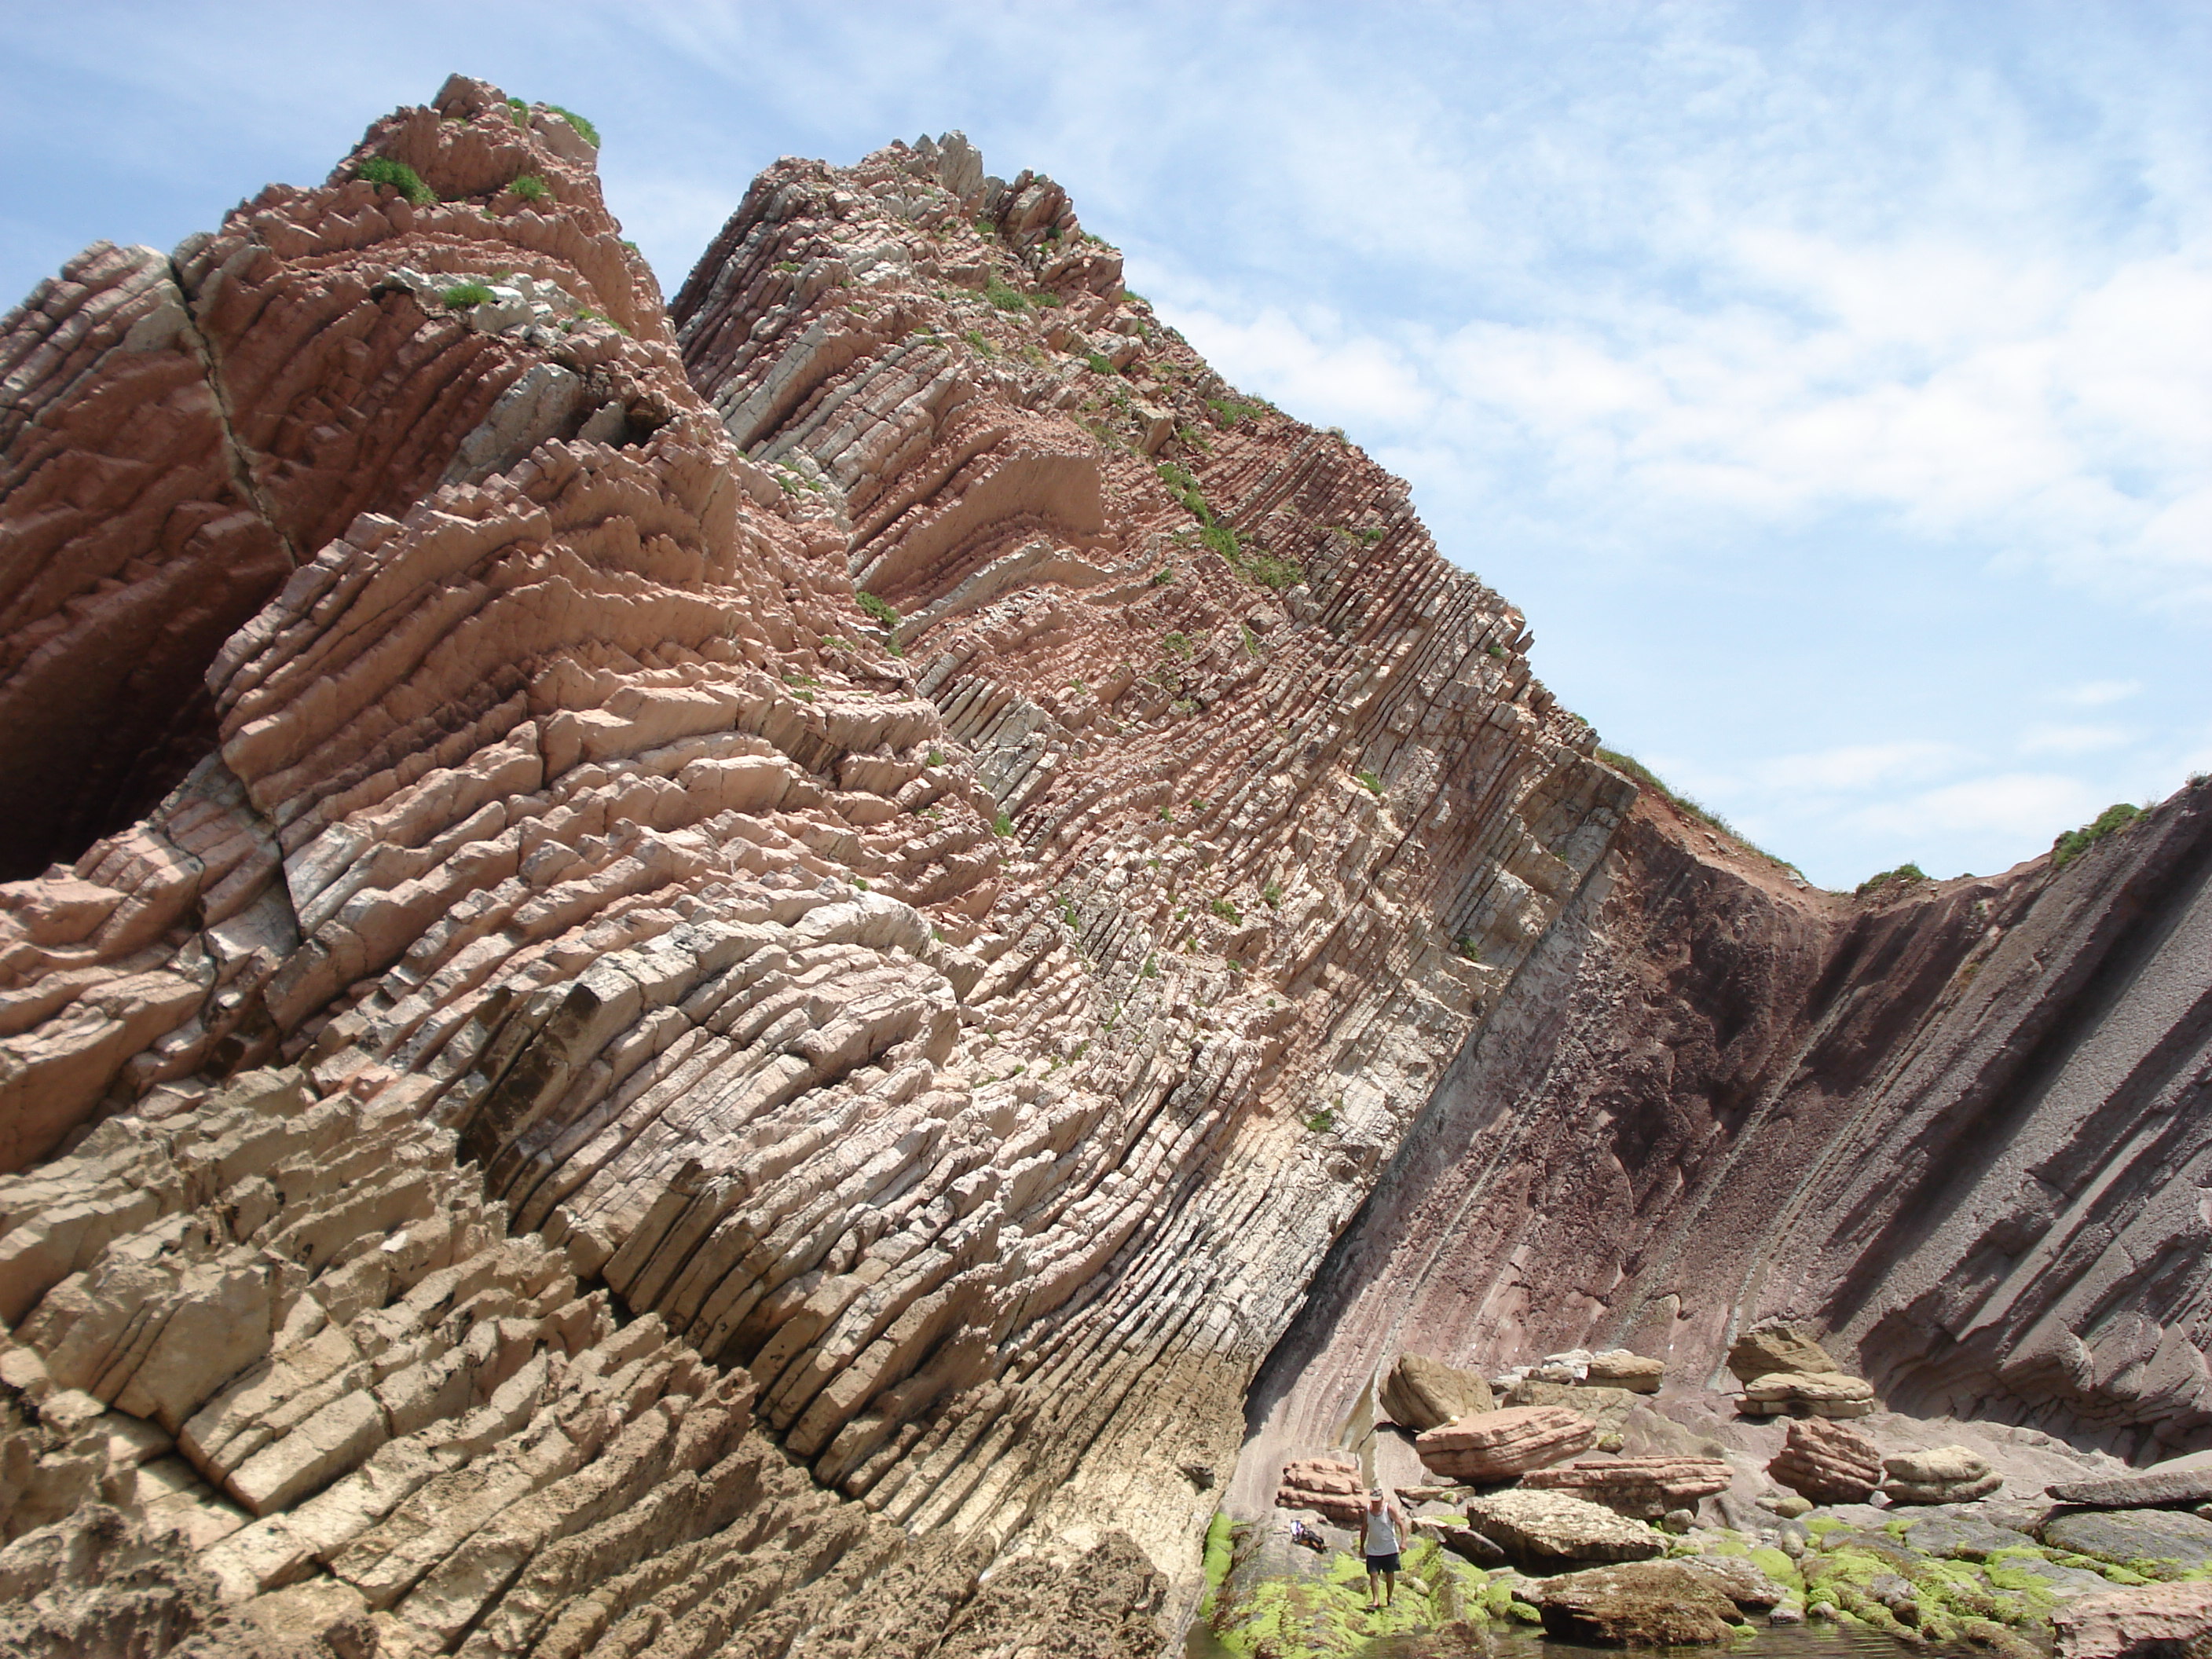 The Cretaceous-Paleogene transition at Zumaia